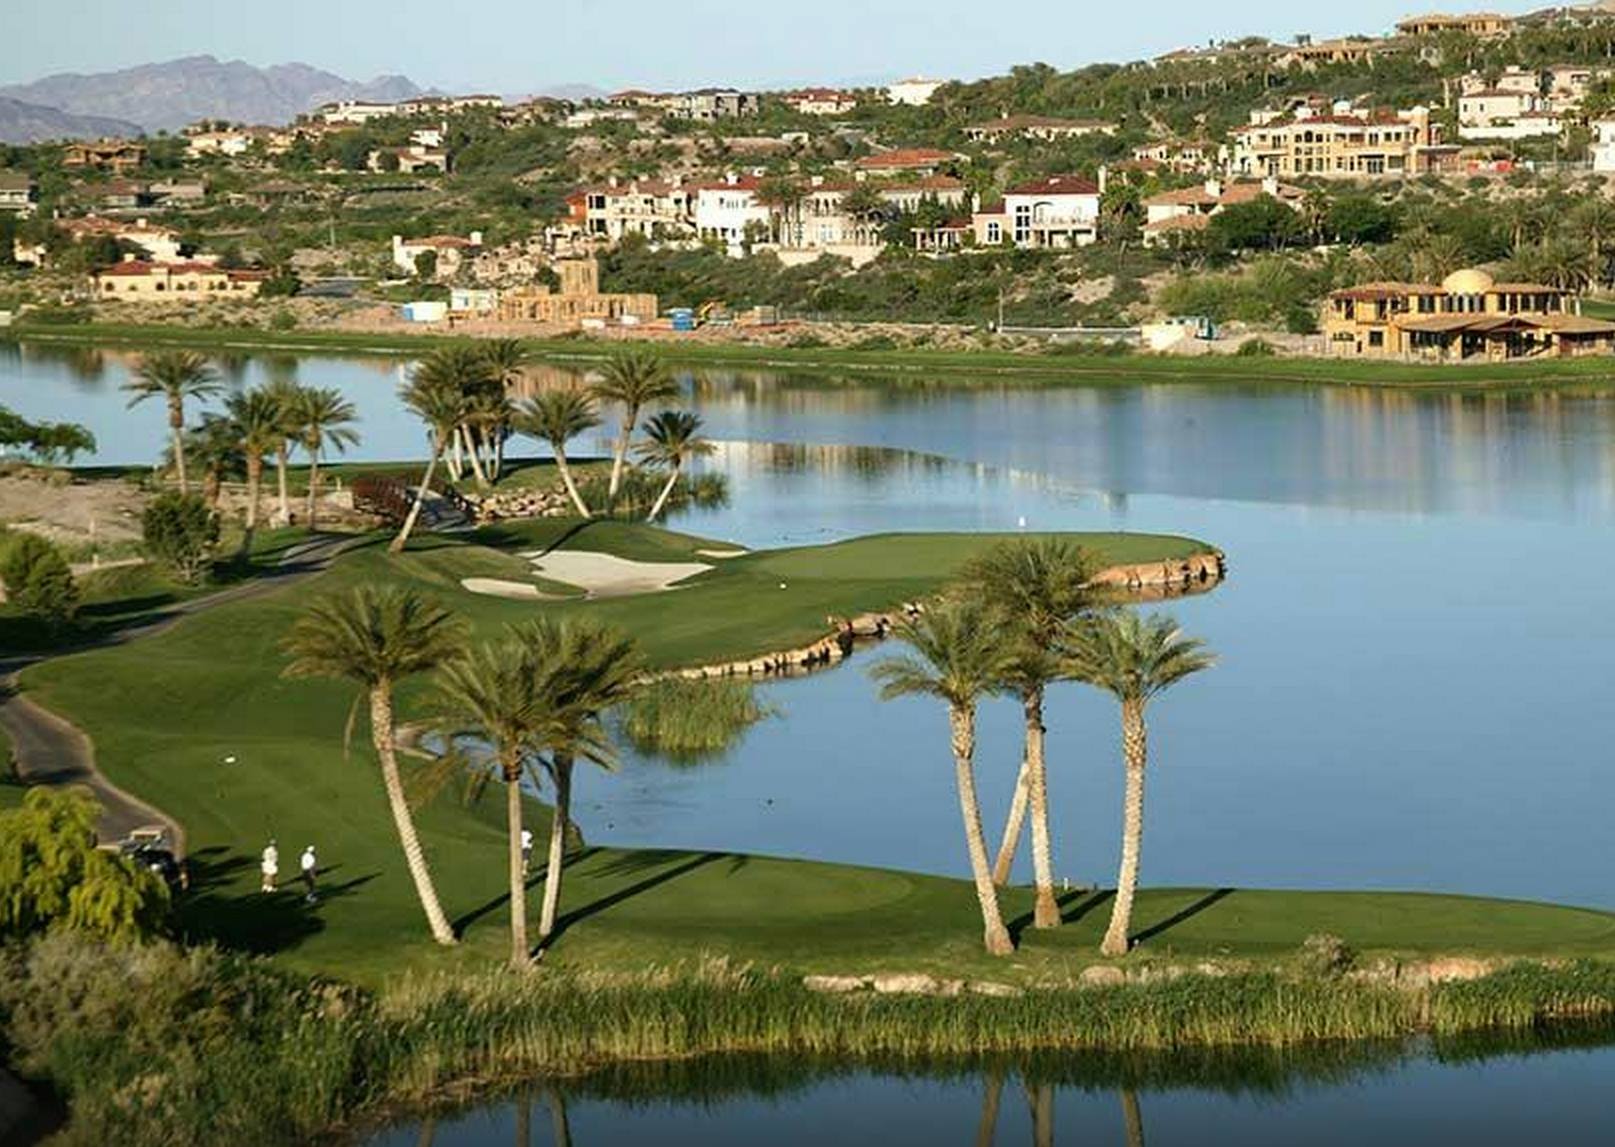 Best Golf Package - Las Vegas Has To Offer